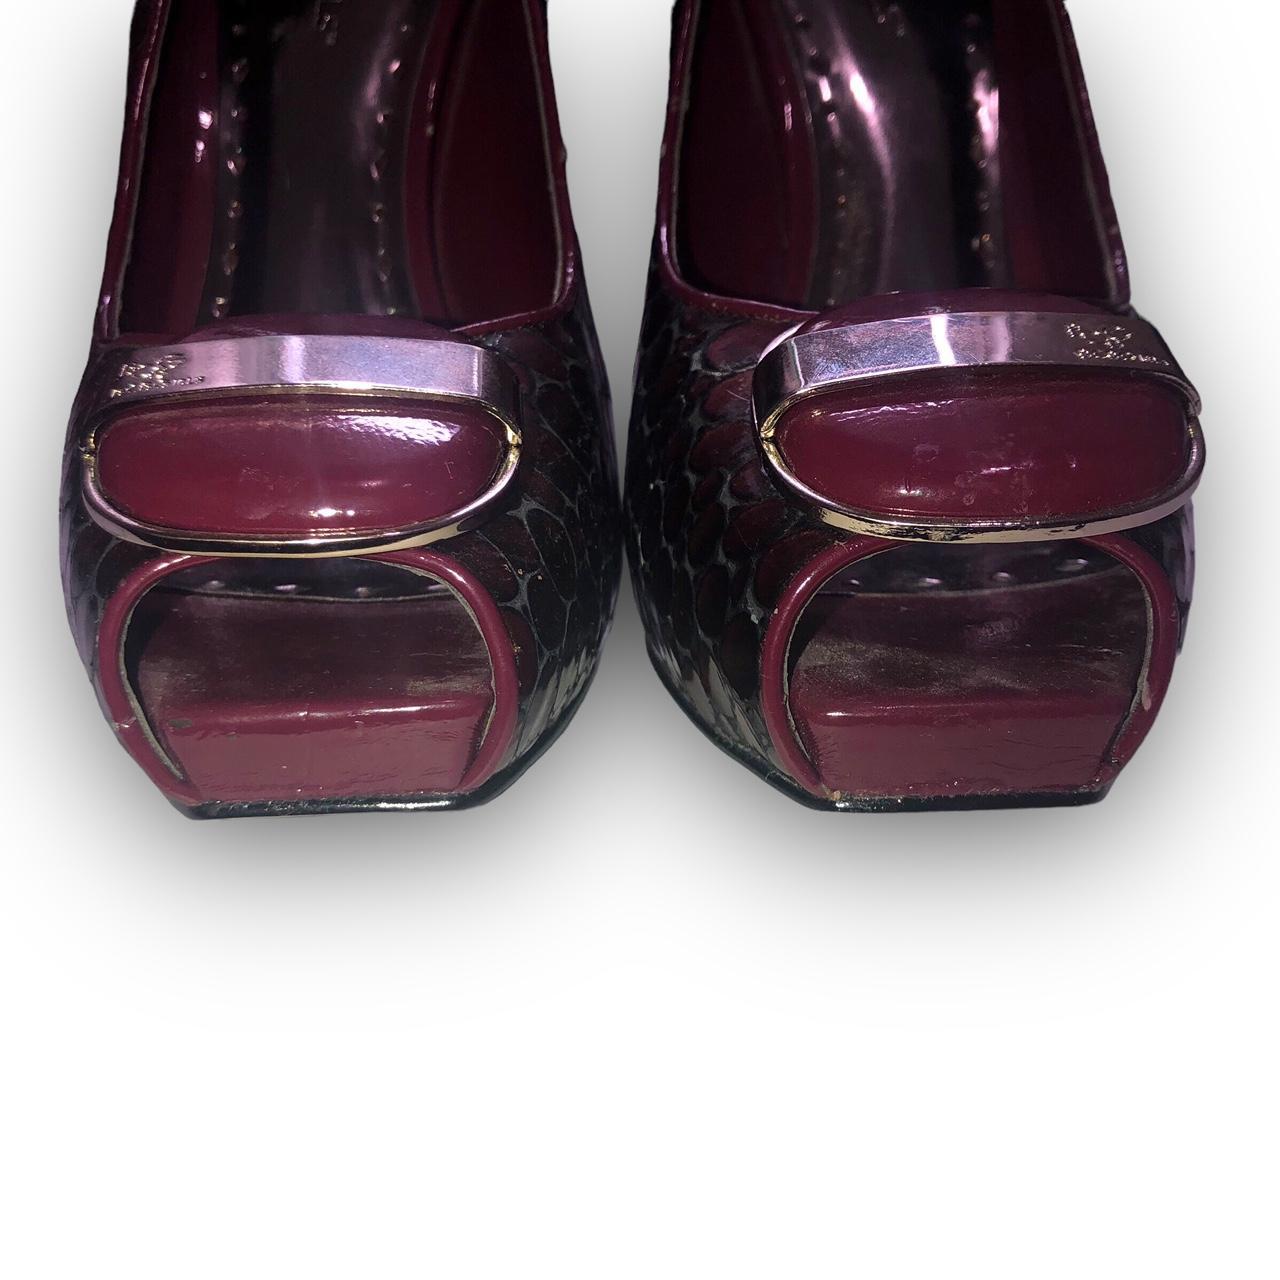 Size 6 - Bcbgirls Women's Patent Leather Open Toe Heel Cherrywood Shoes